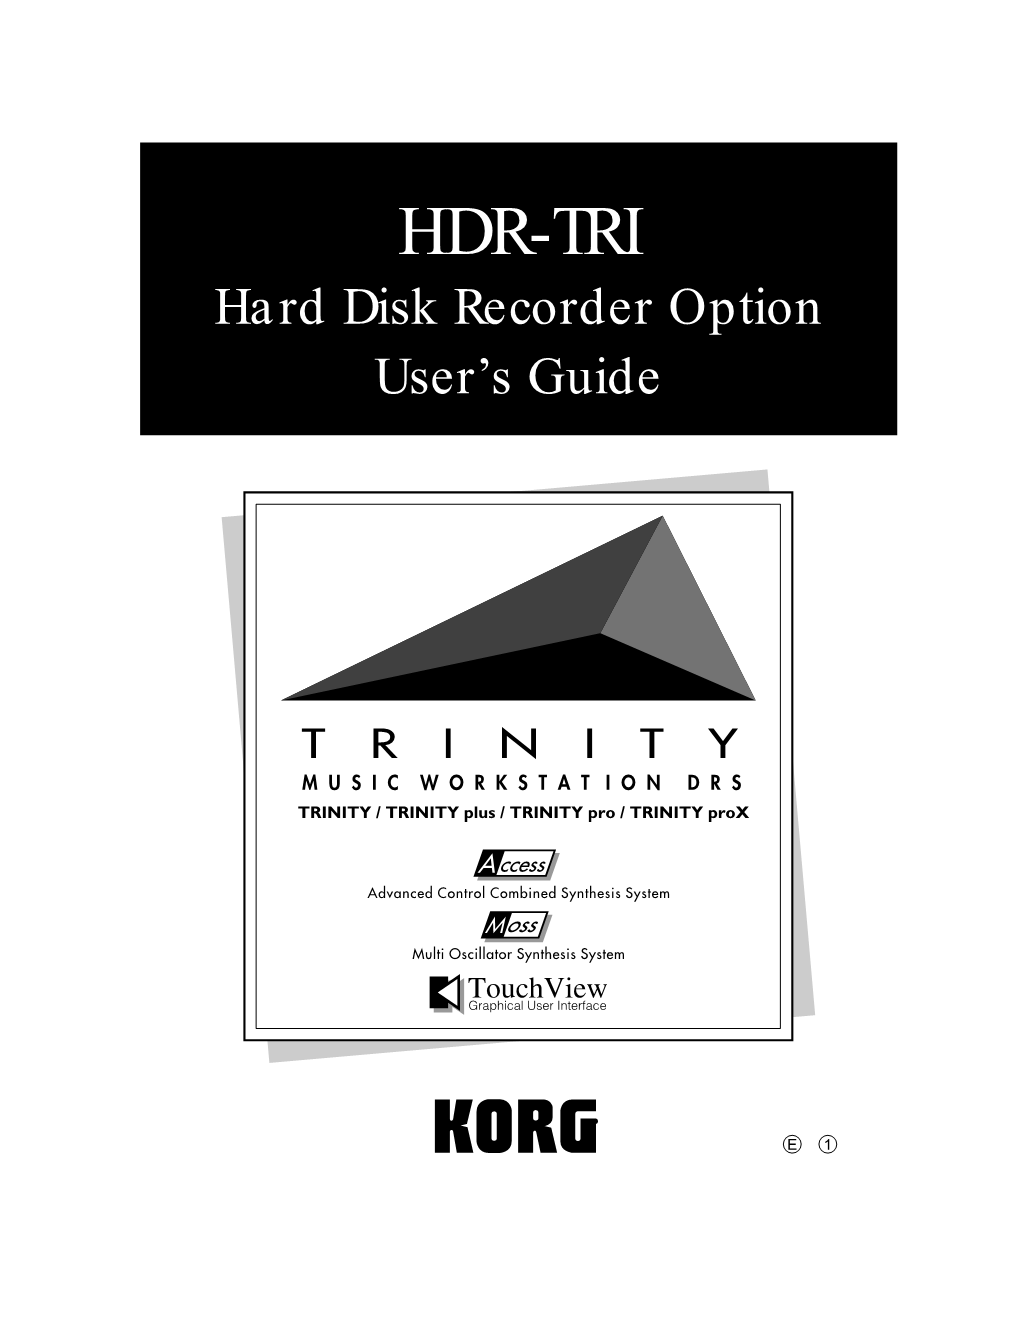 HDR-TRI Hard Disk Recorder Option User’S Guide